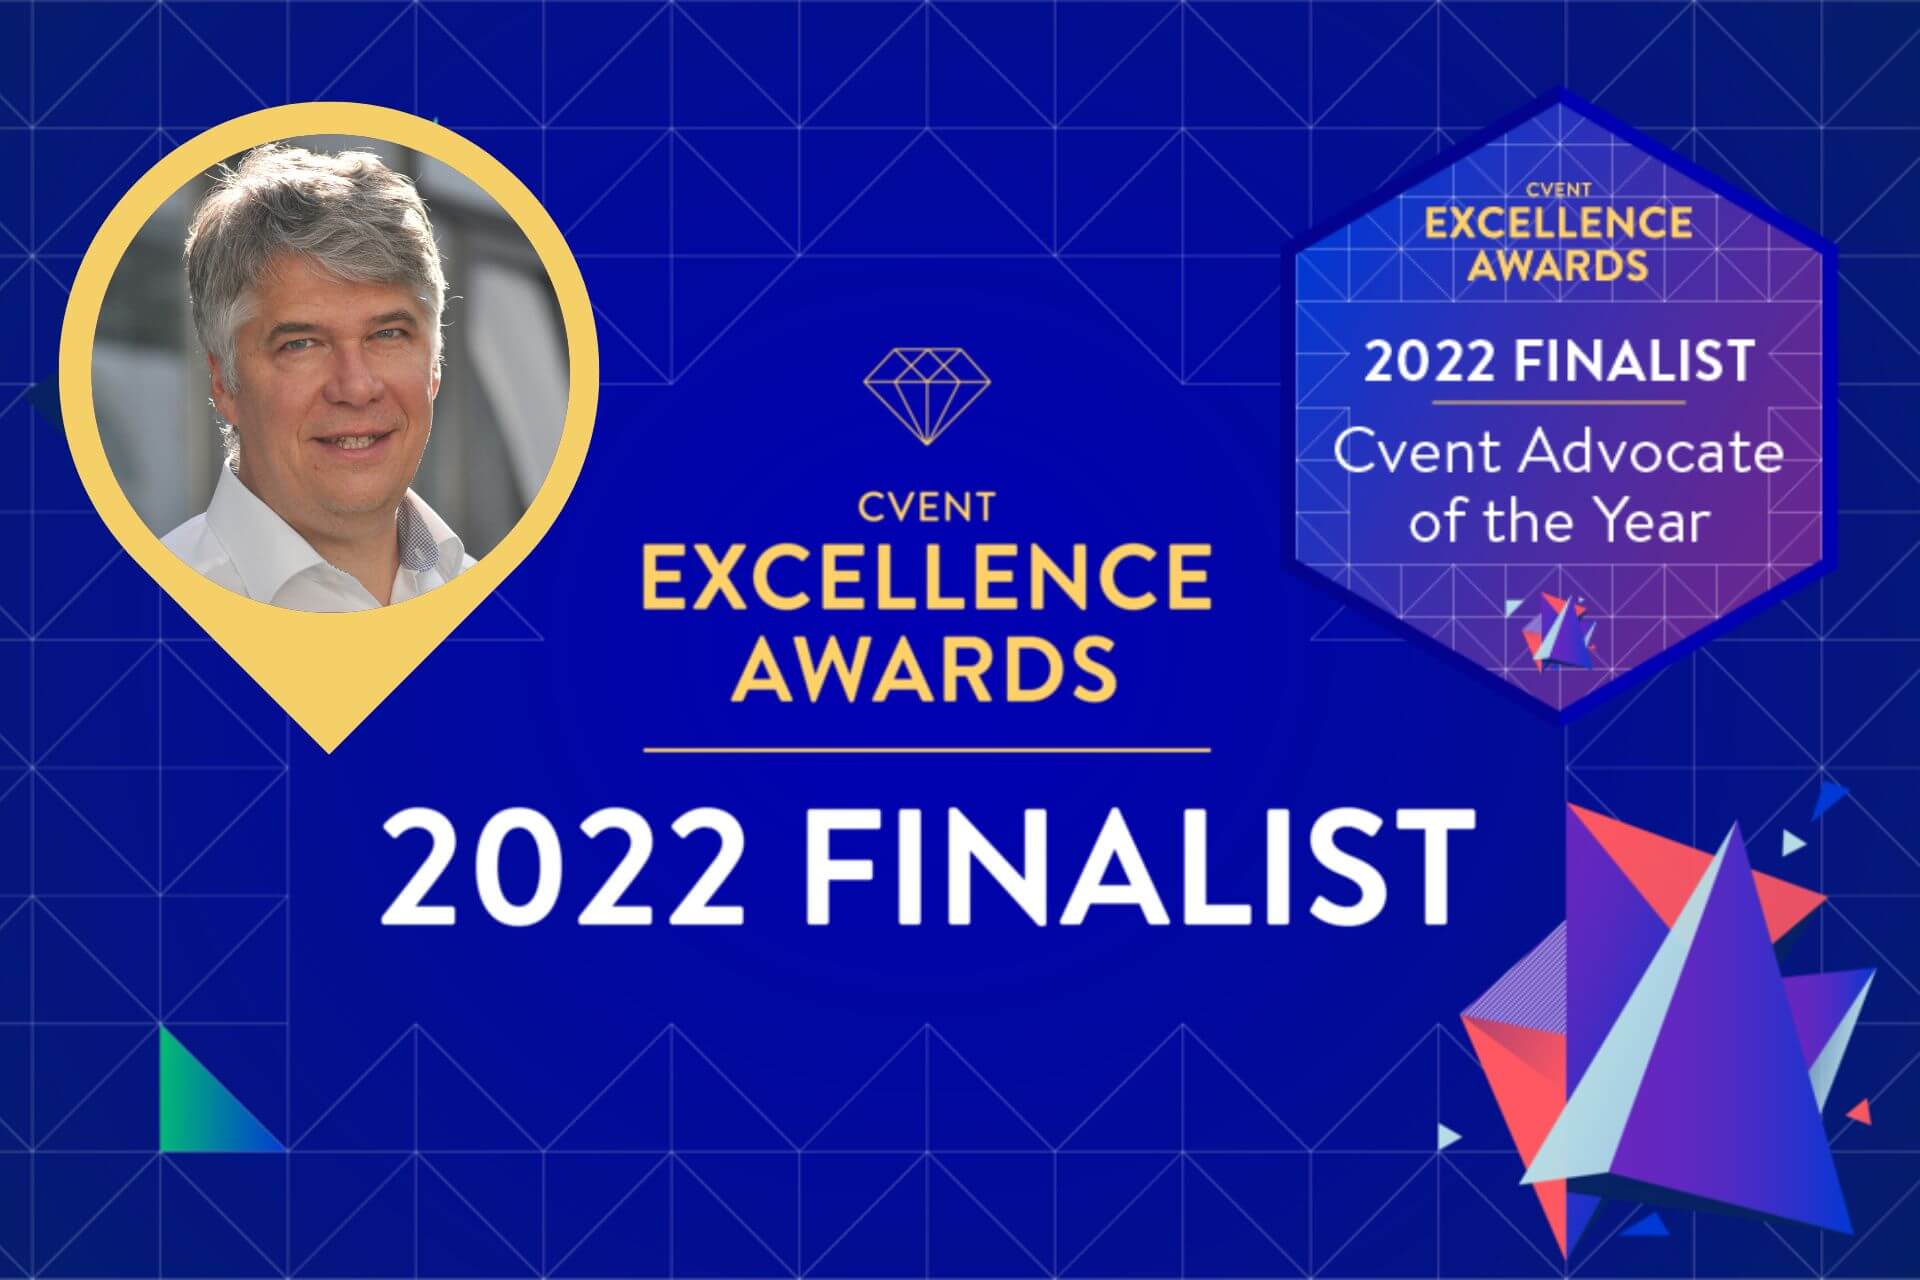 Cvent Excellence Awards Finalist 2022